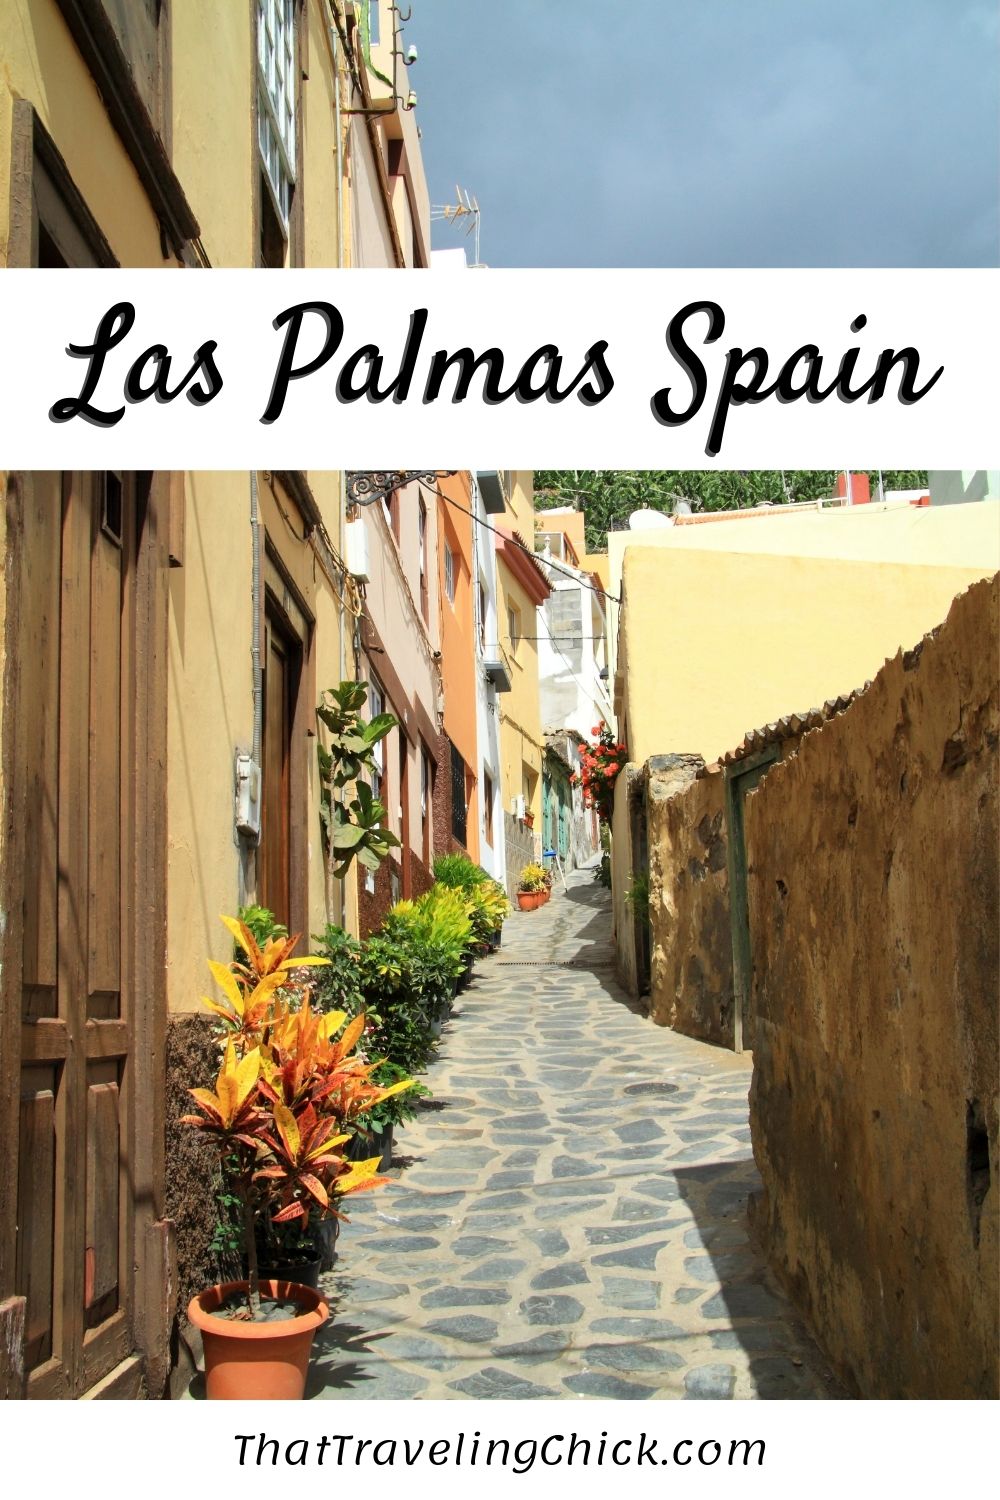 Las Palmas Spain #laspalmasspain #spain